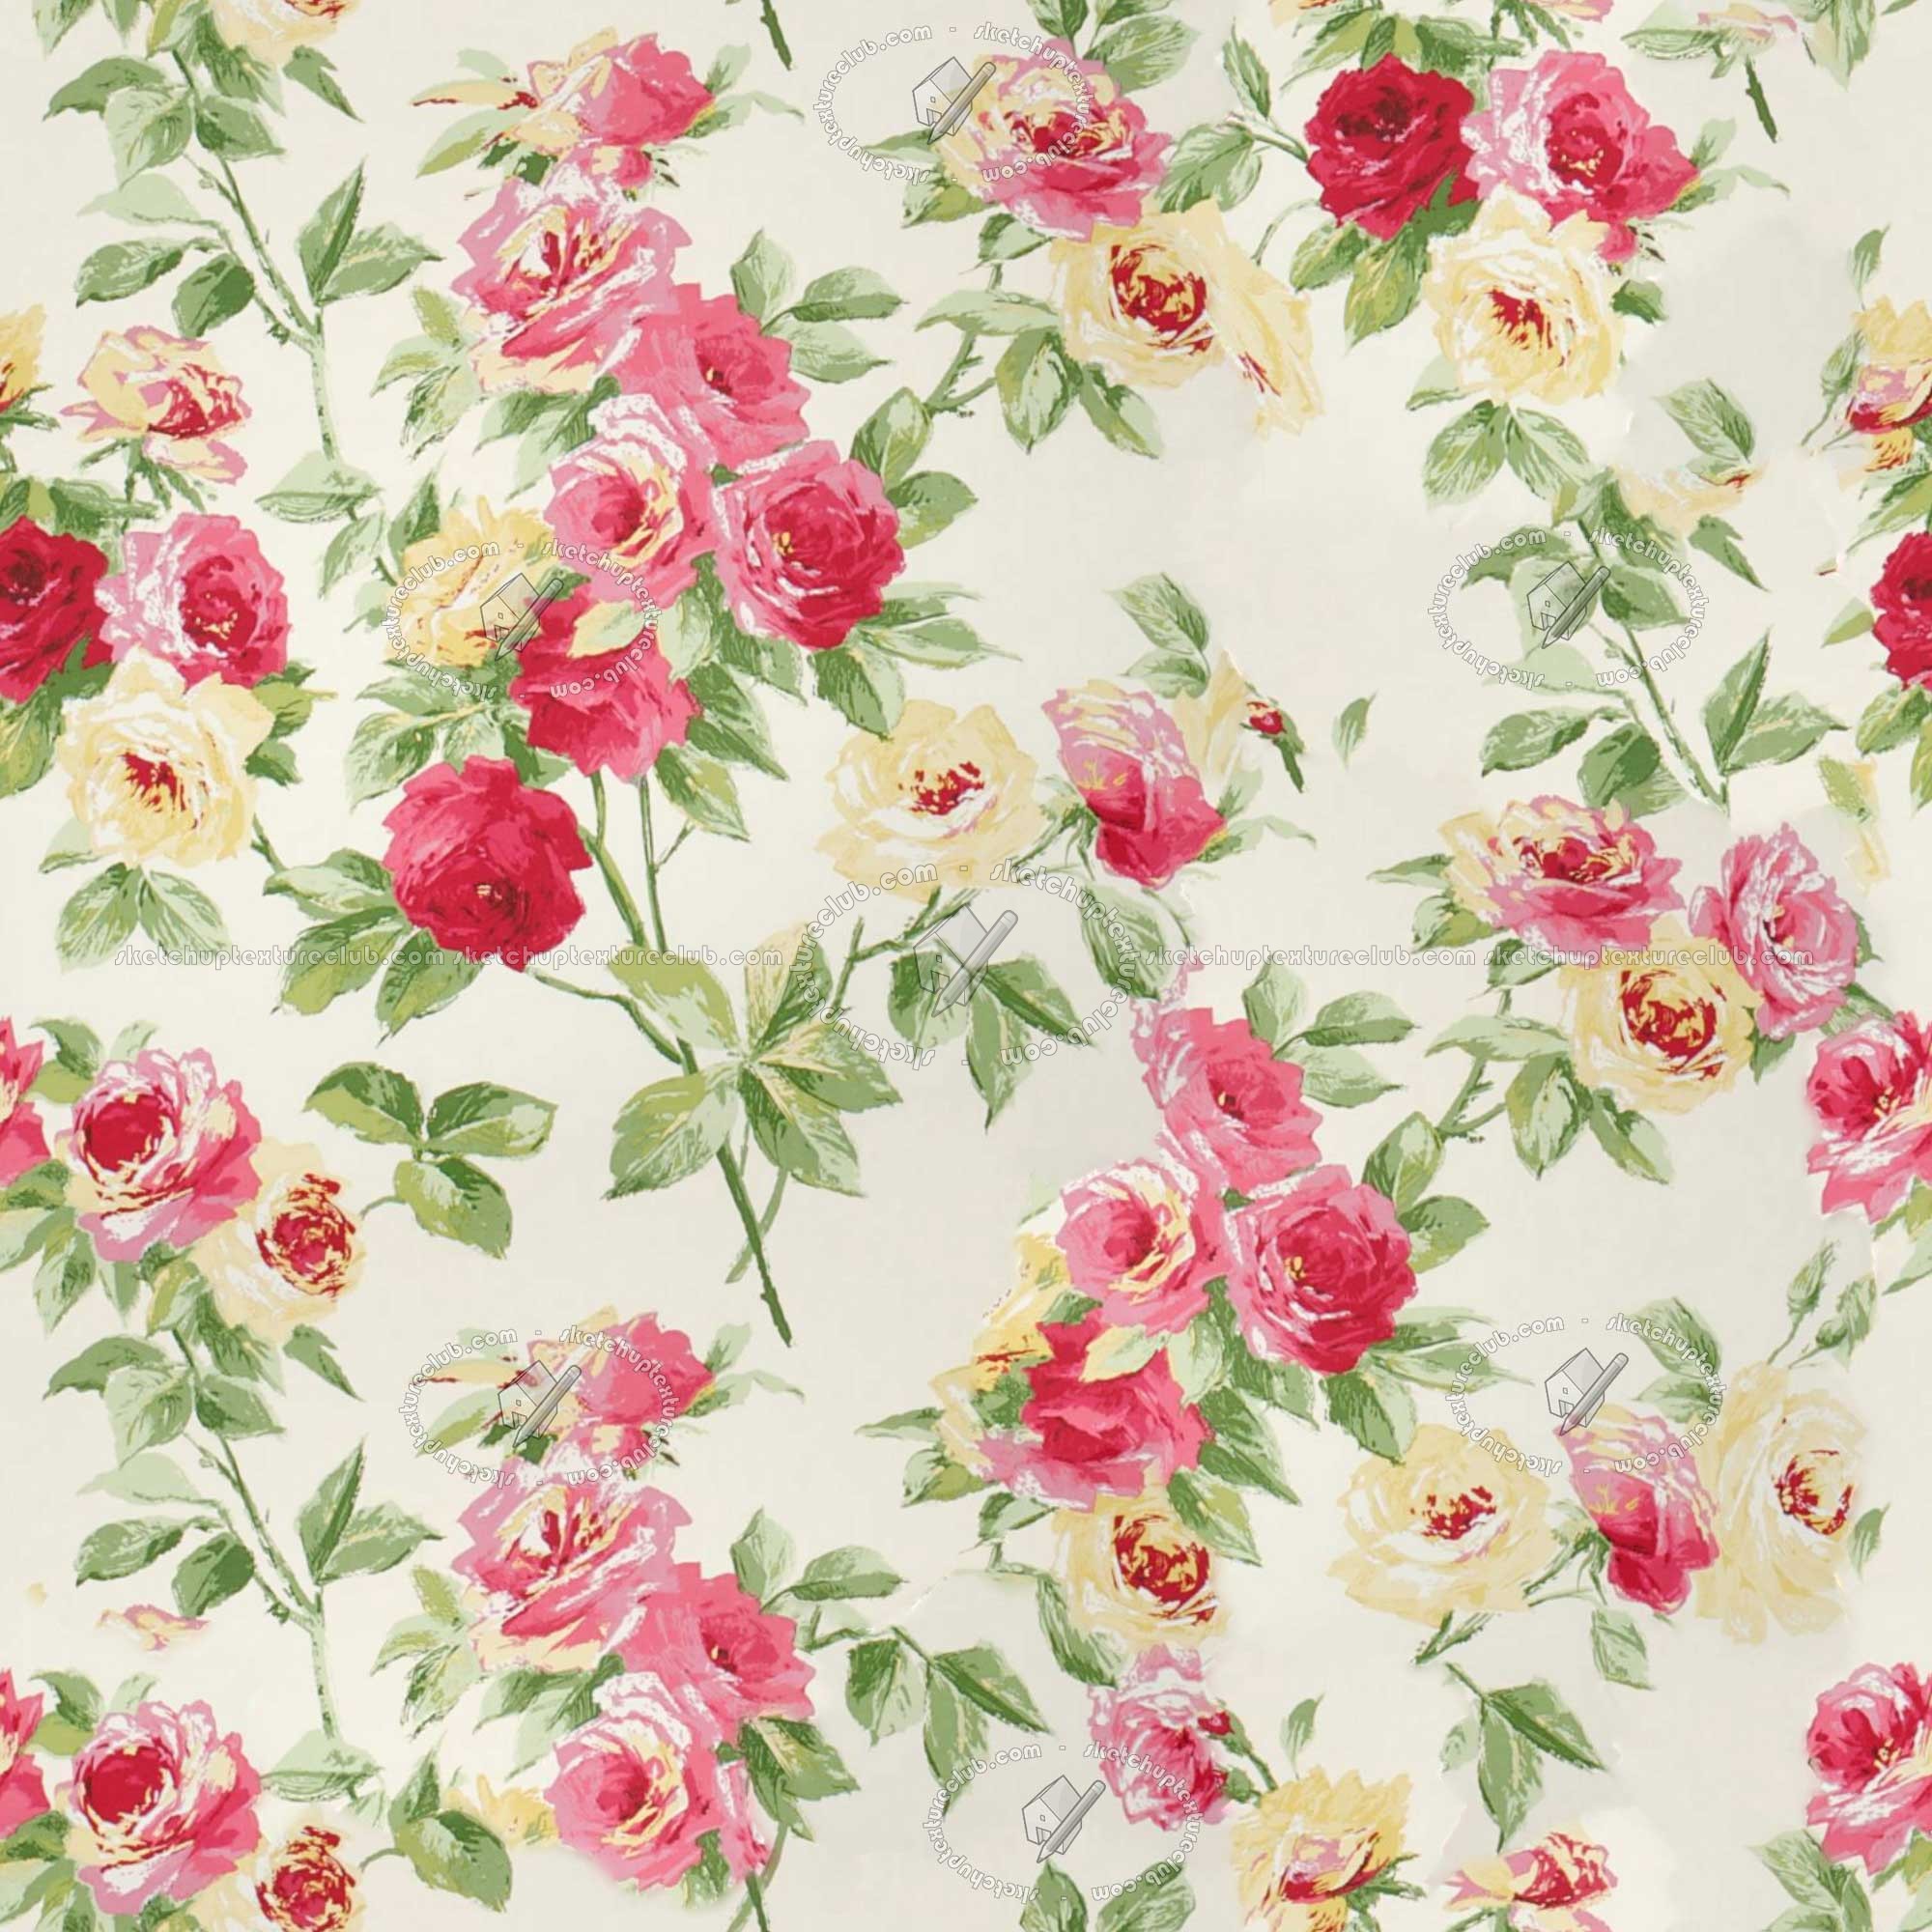 Floral Wallpaper Texture | PixLith